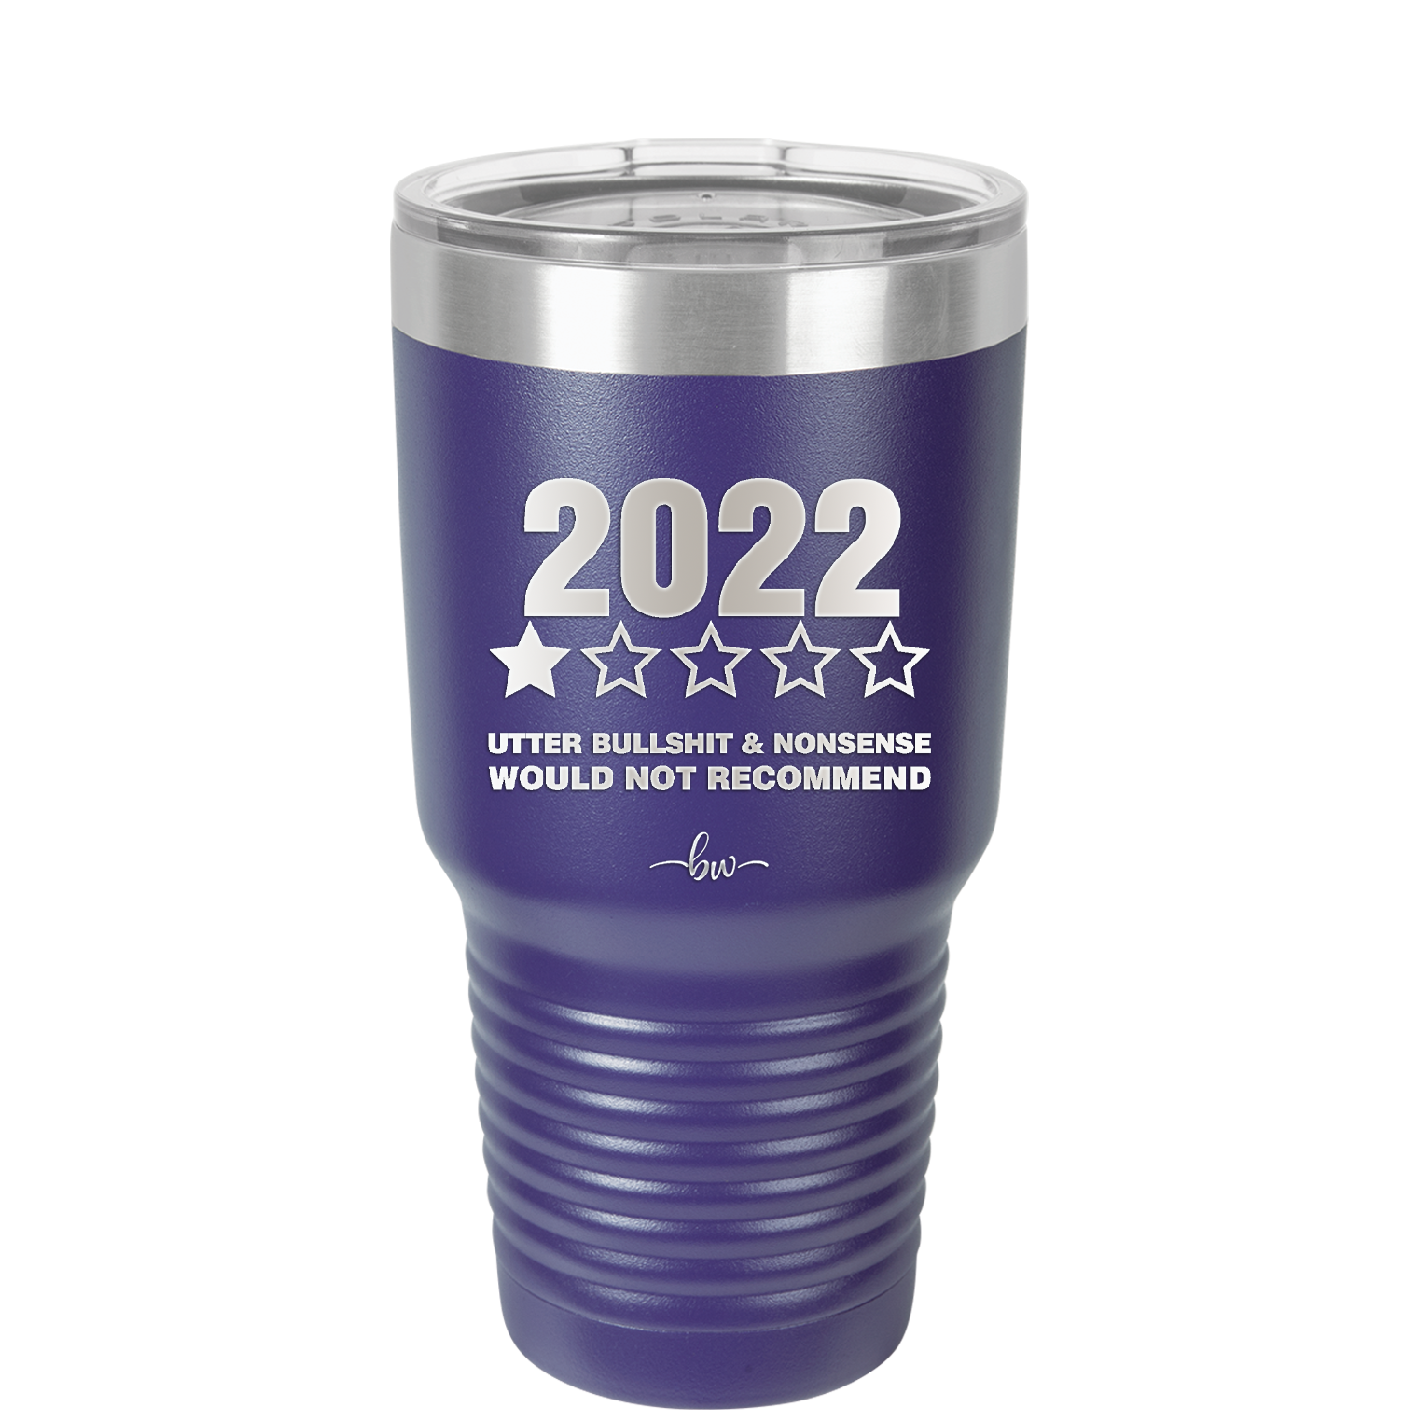 30 oz 2022 utter bullshitt and nonsense would not recommend- purple